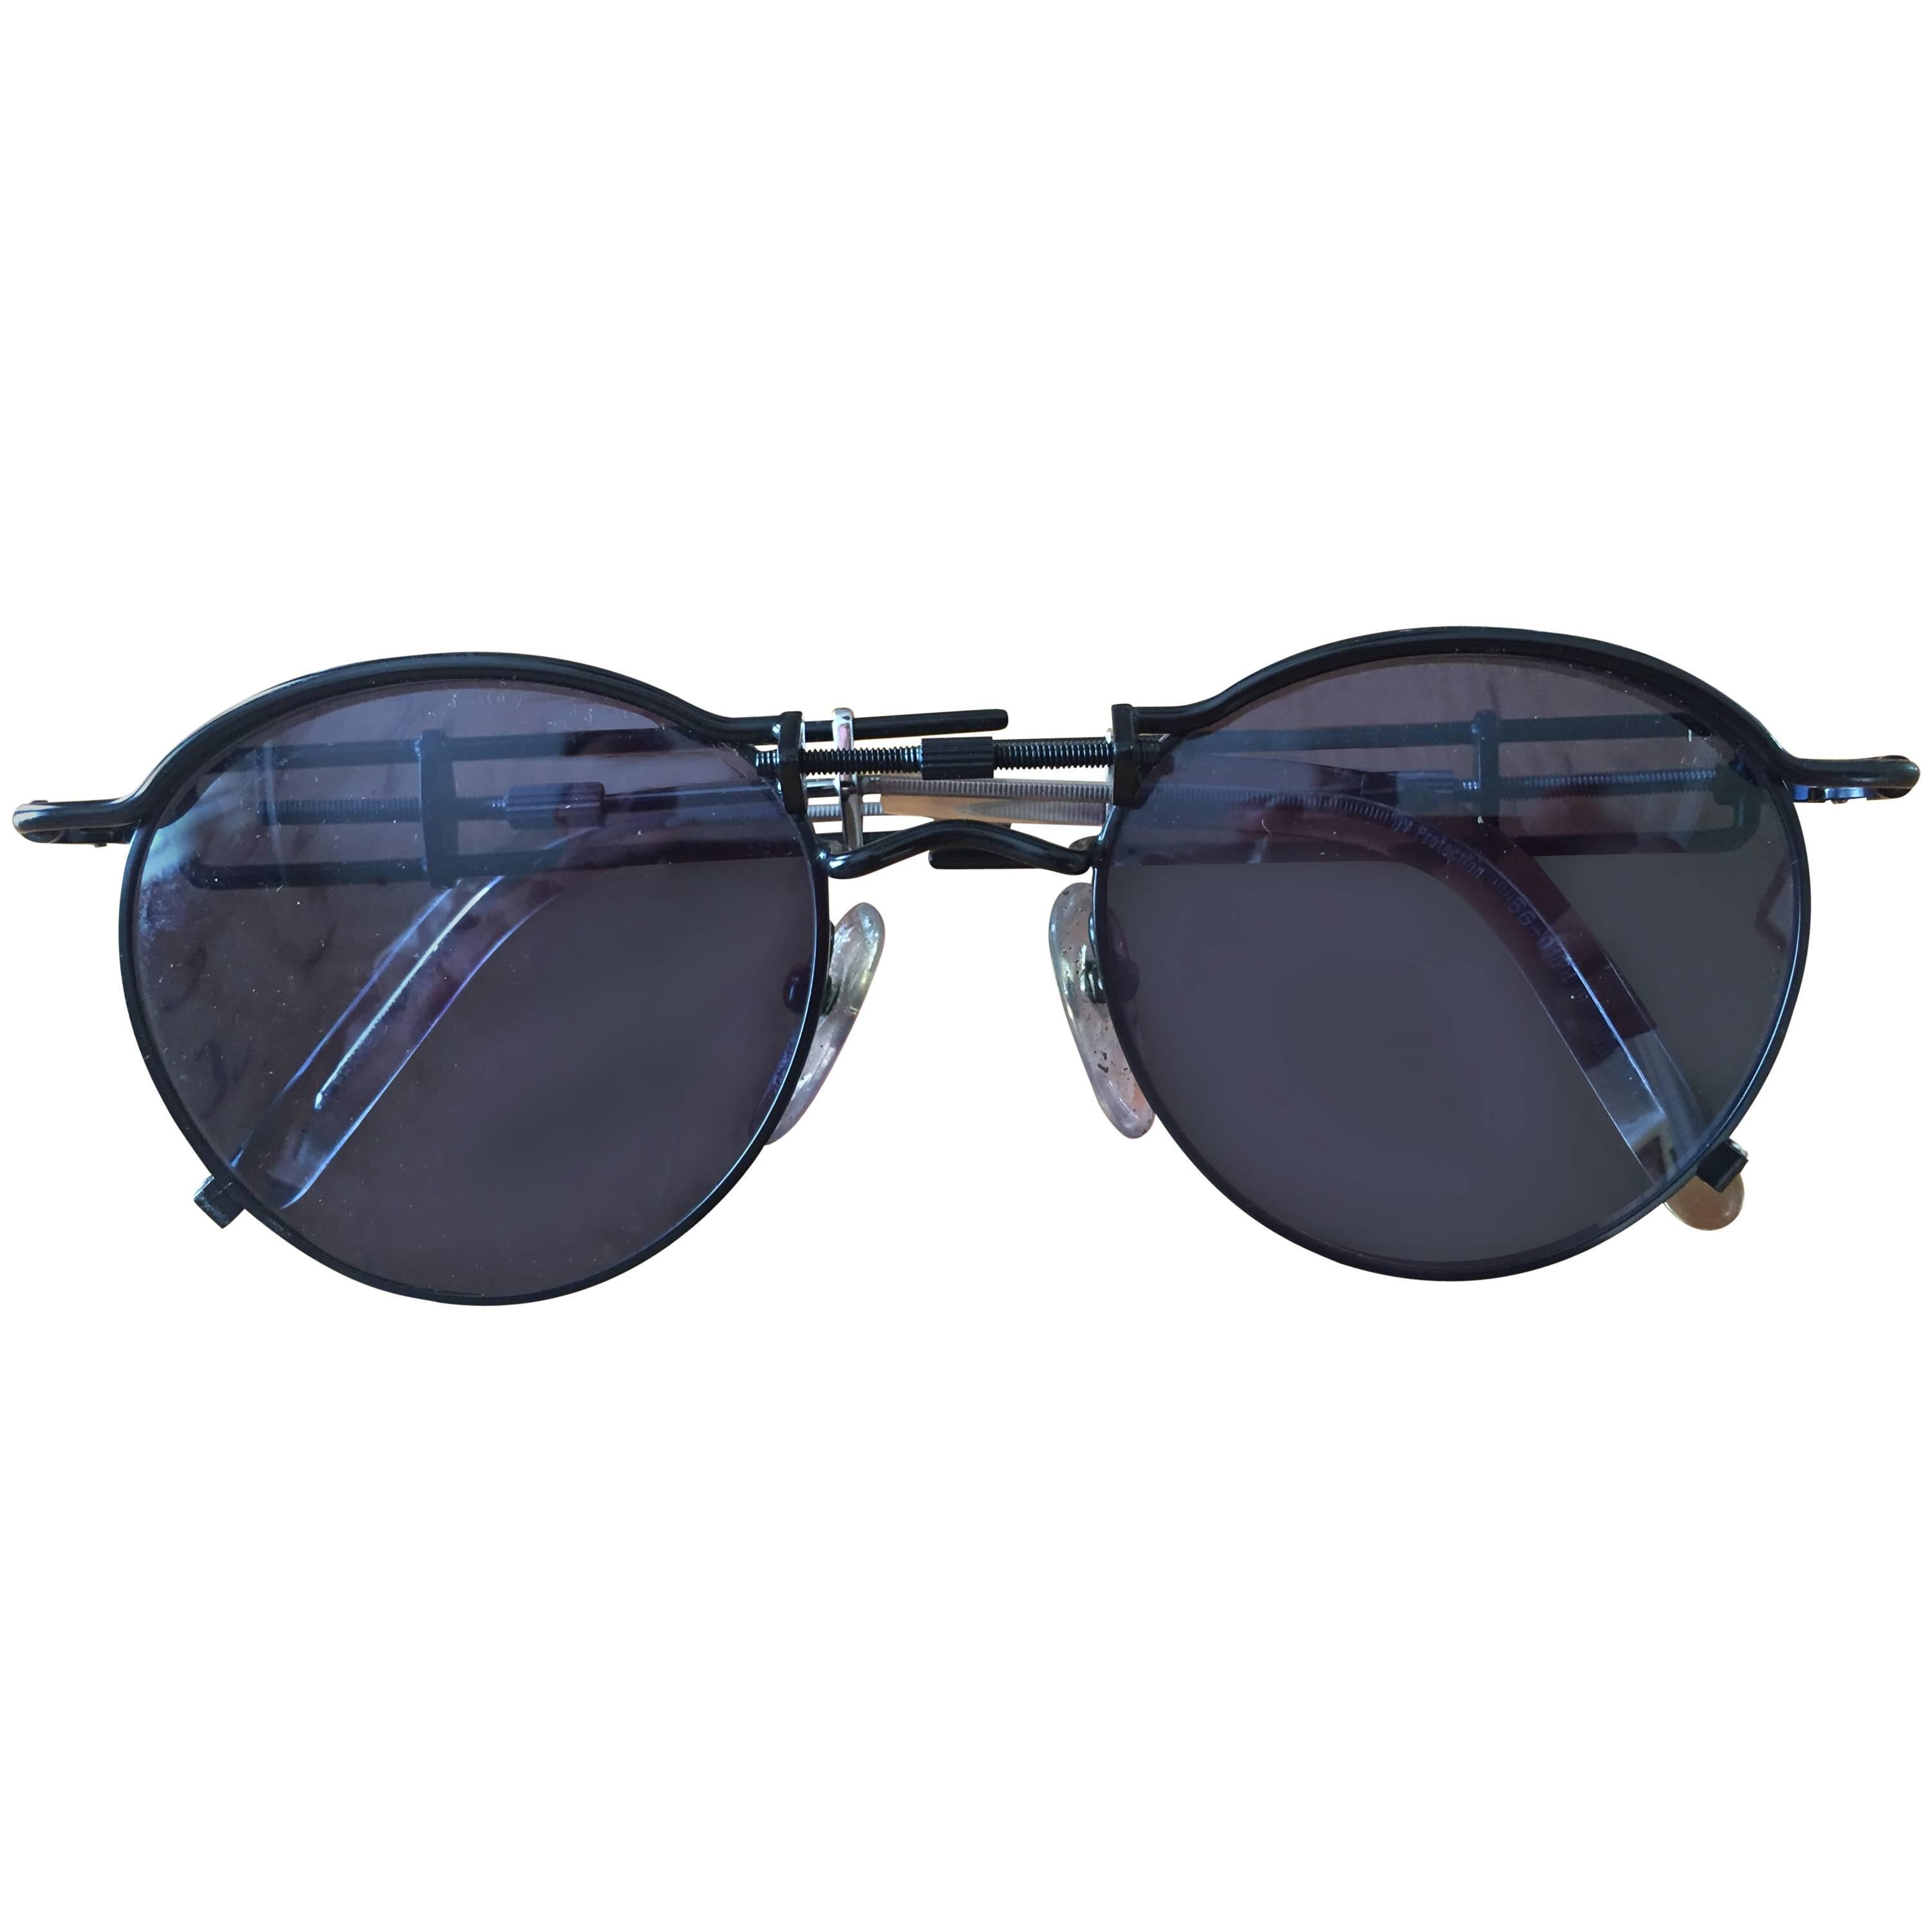 Jean Paul Gaultier Vintage Sonnenbrille Tupac Shakur